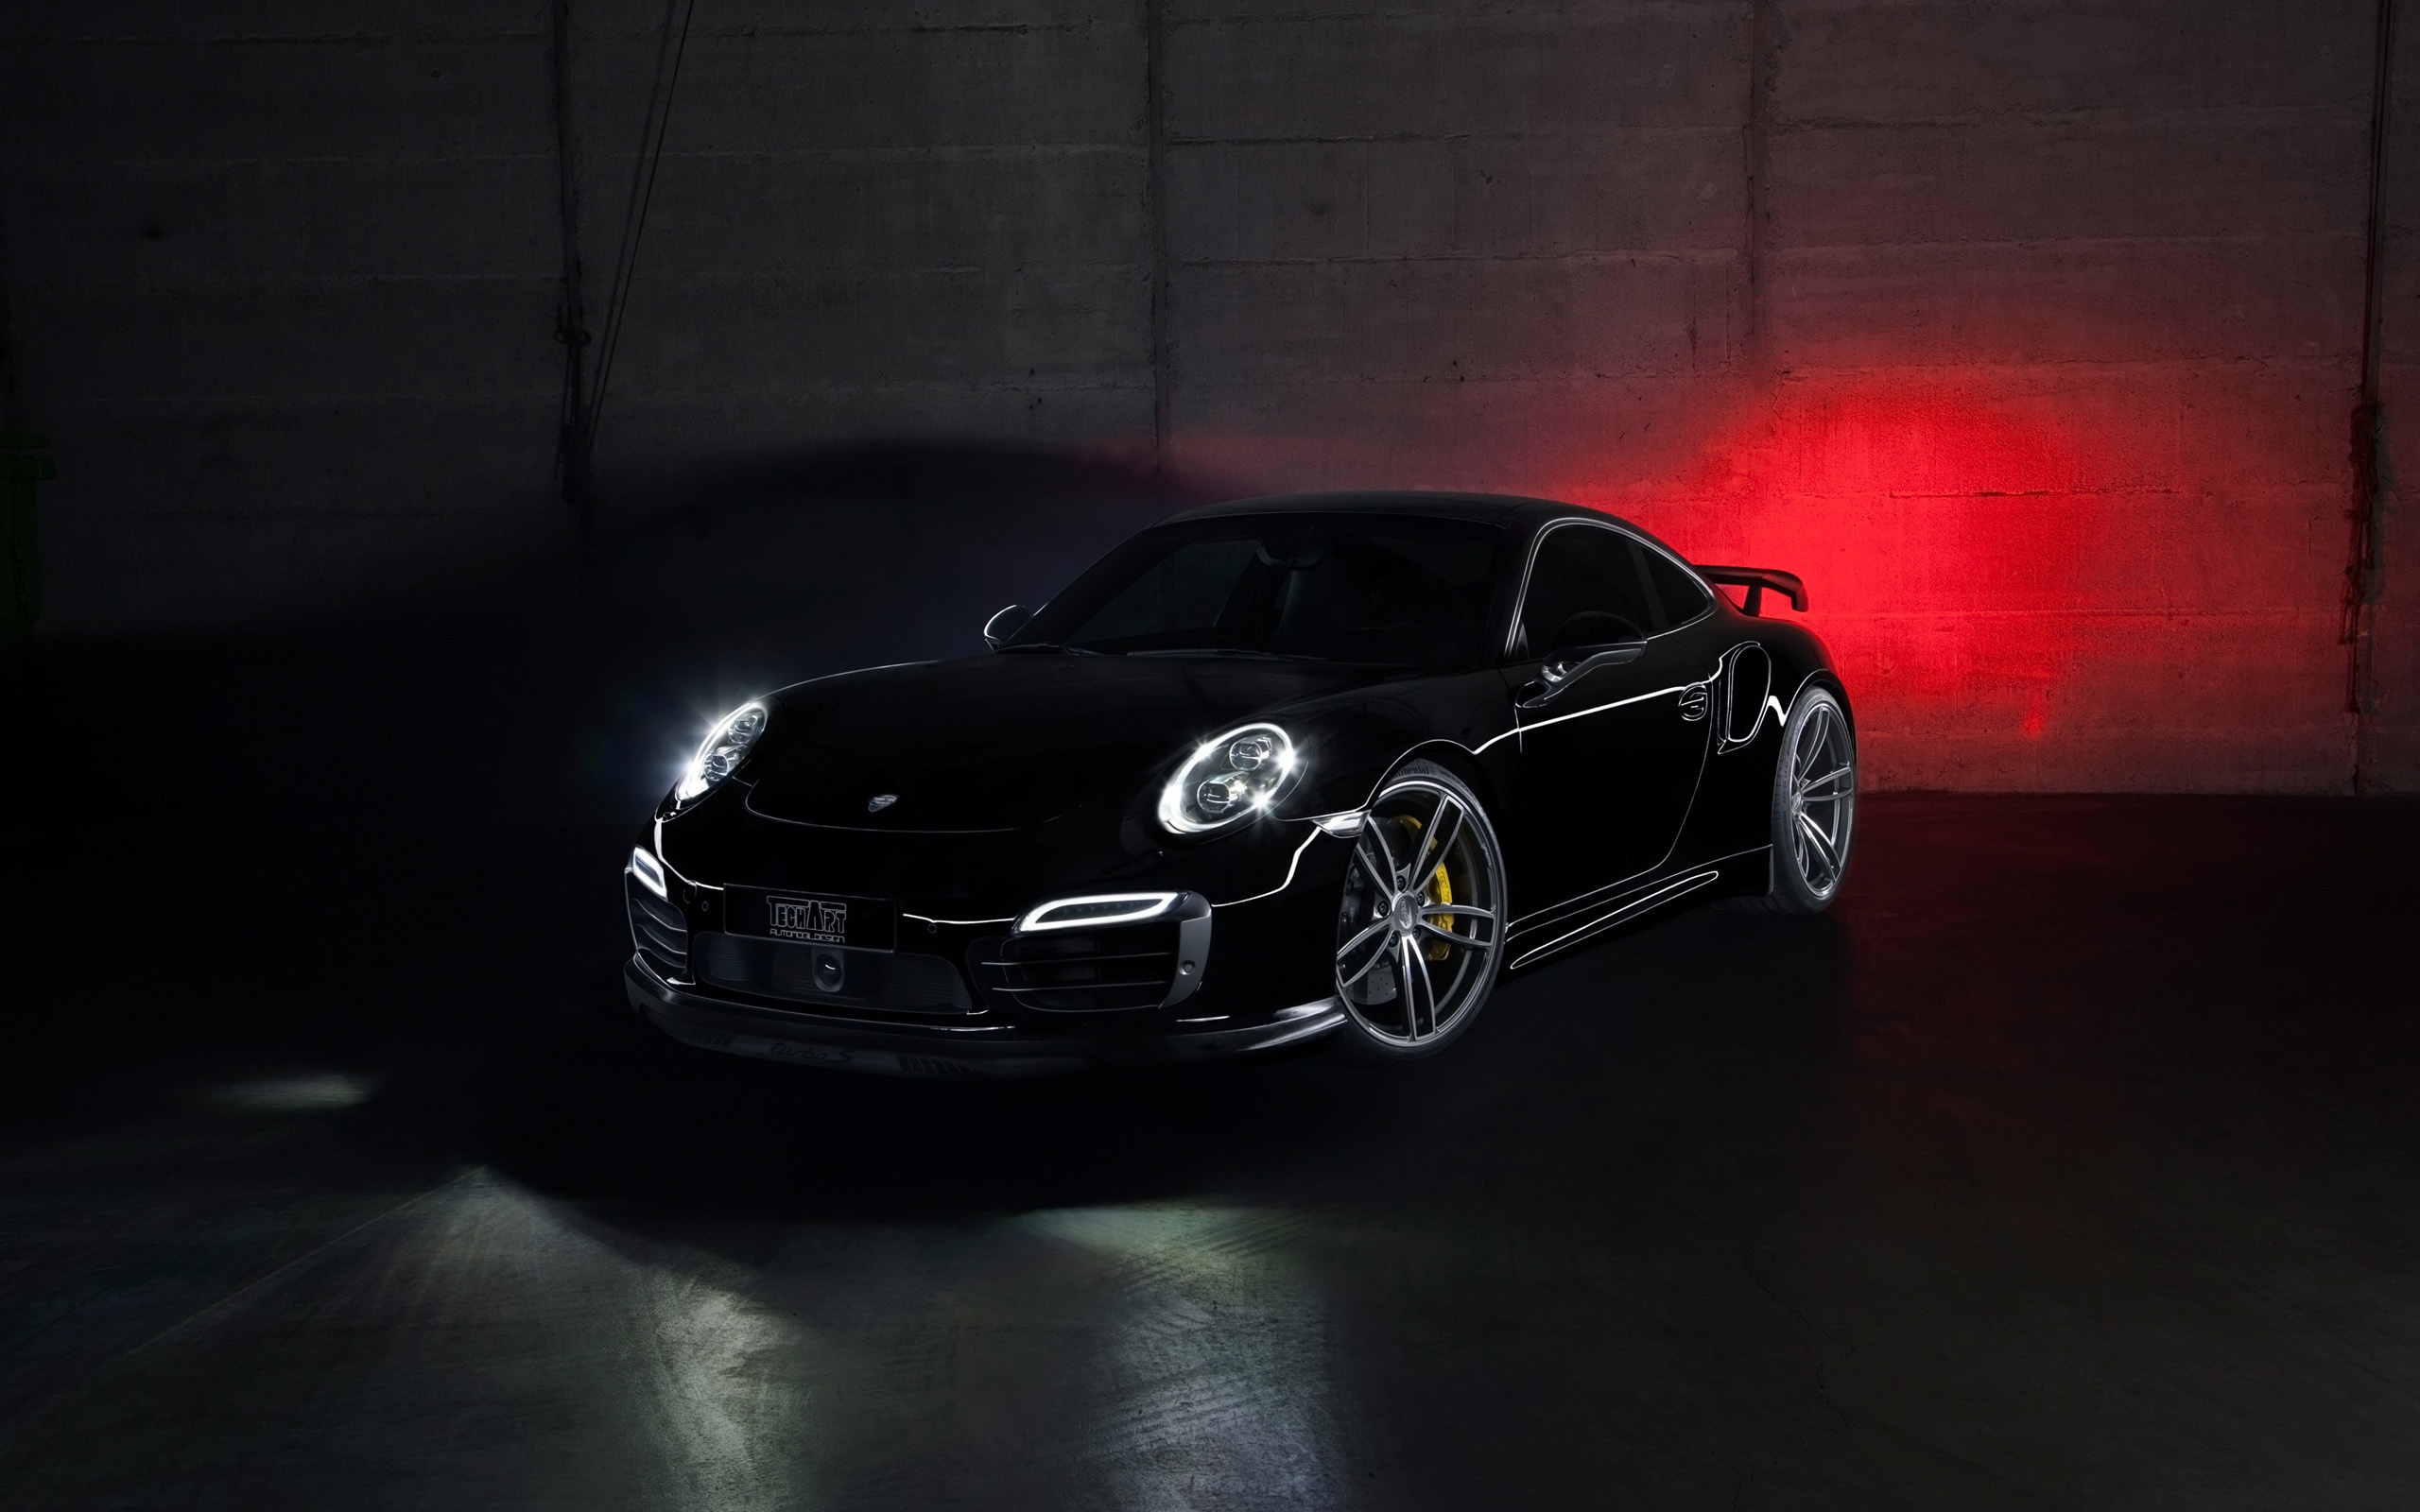 Techart Porsche Turbo Wallpaper In Jpg Format For